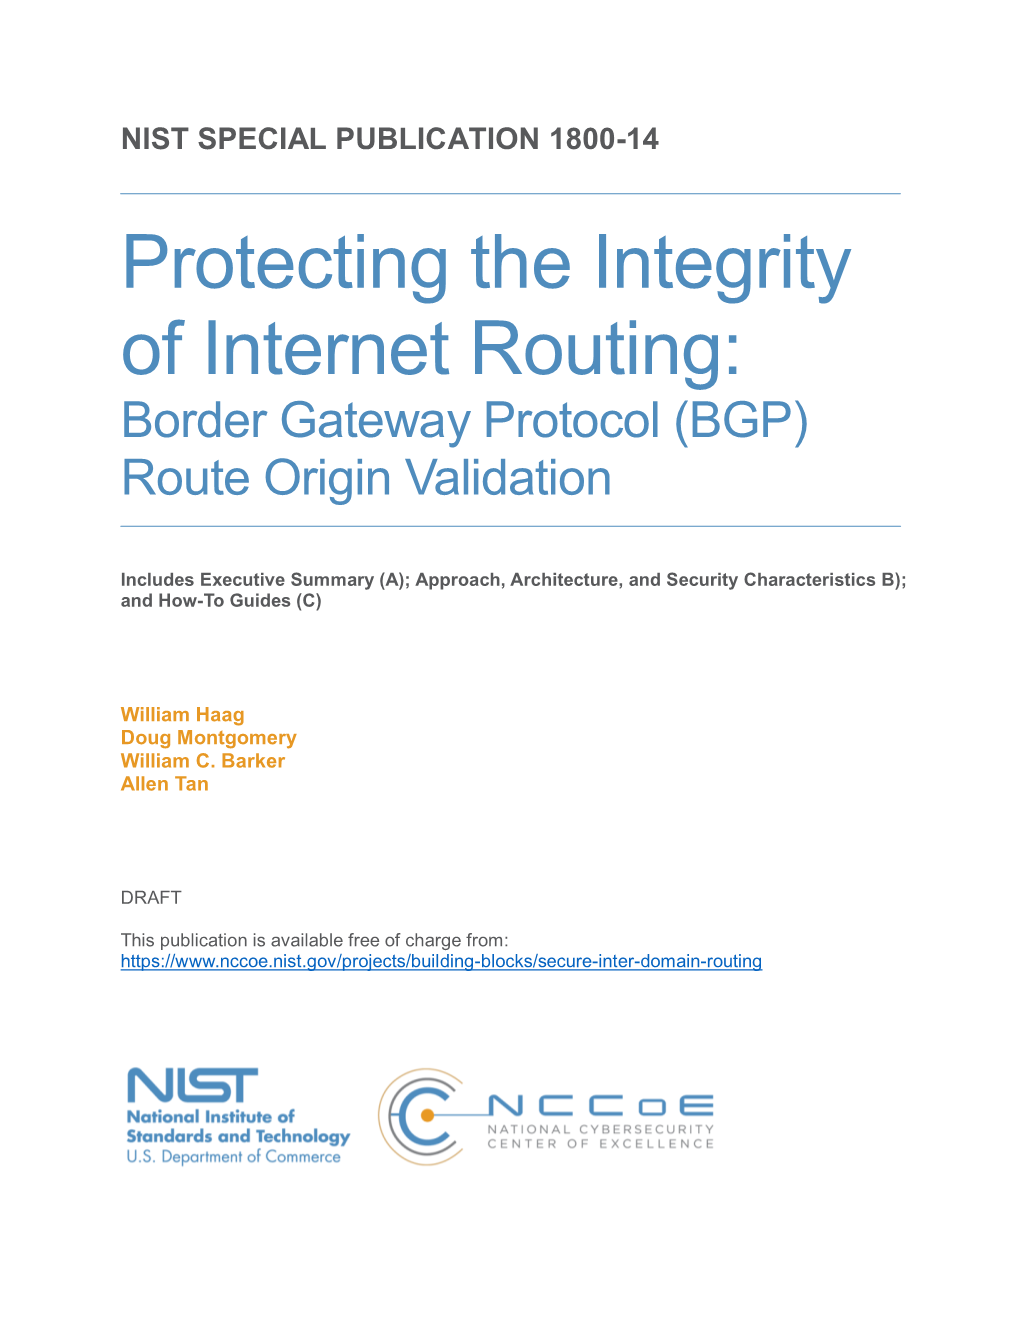 Border Gateway Protocol (BGP) Route Origin Validation